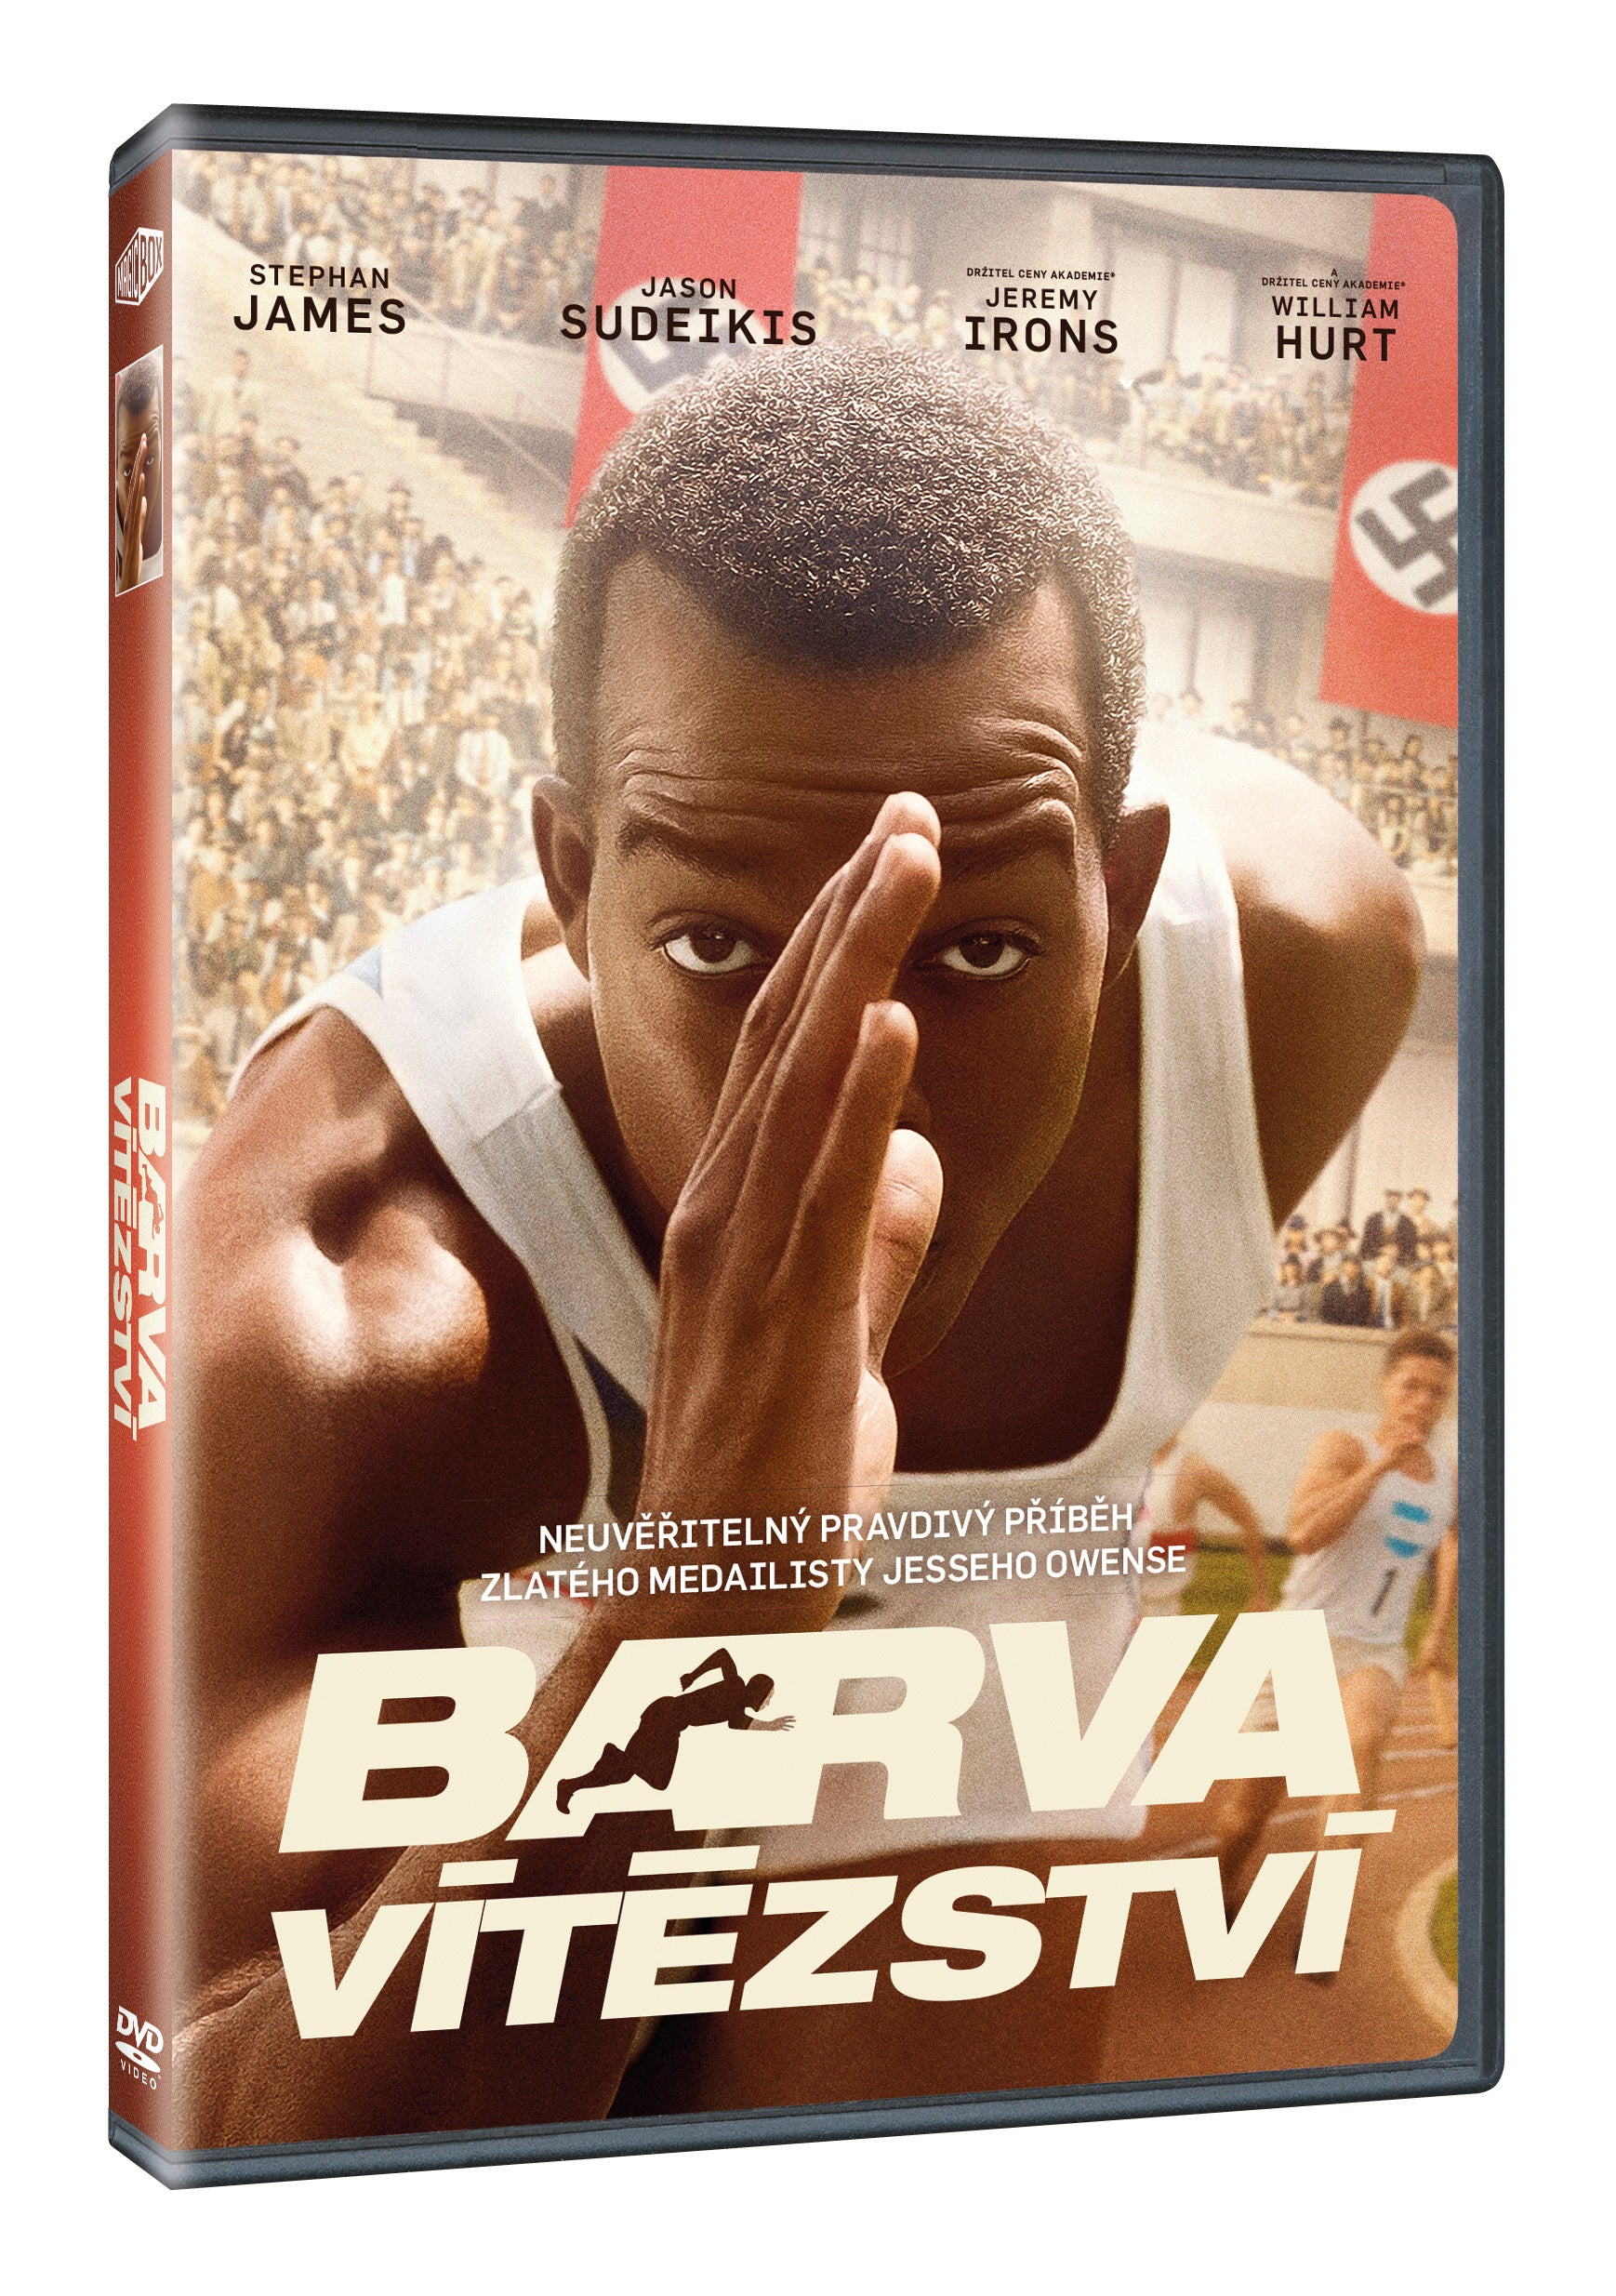 Barva vitezstvi DVD / Race